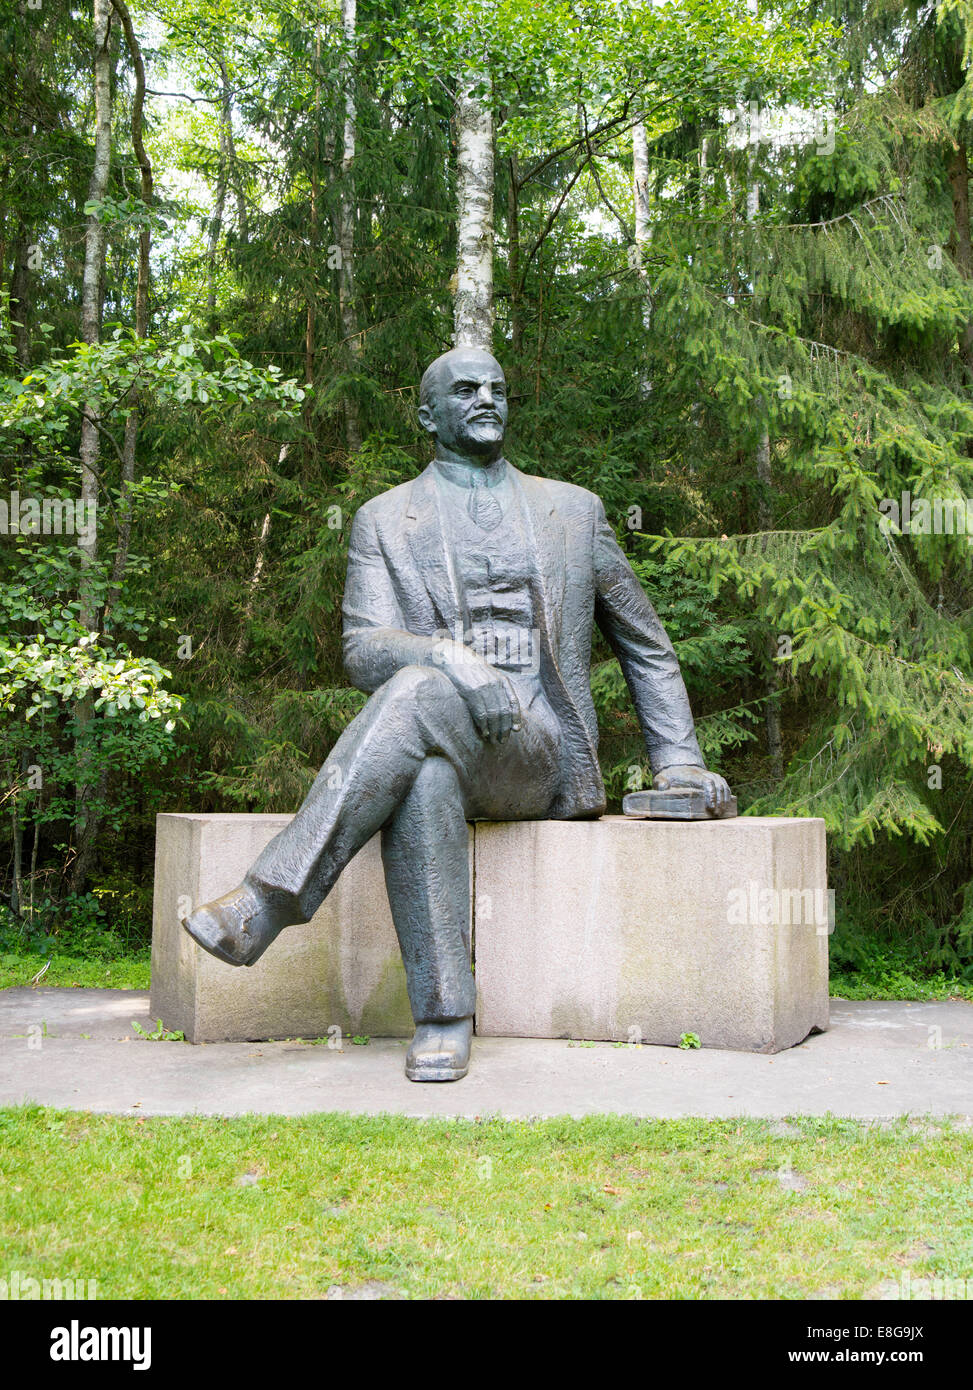 A statue of Vladimir Lenin stands in Grutas Park, near Alytus, Lithuania Stock Photo